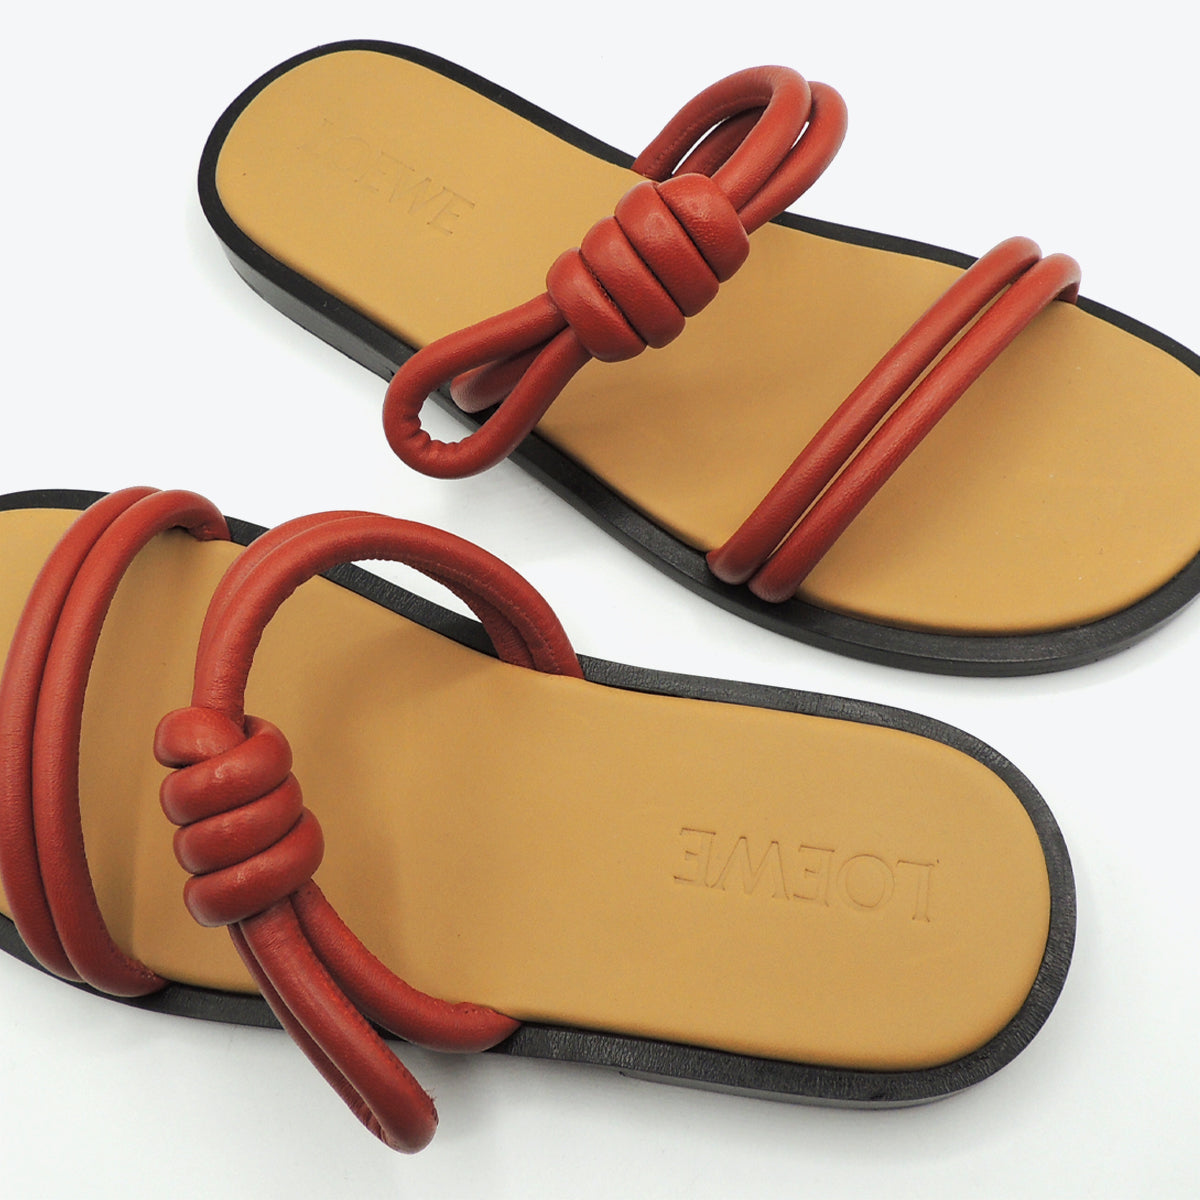 Loewe Flamenco Leather Sandals in Deep Rust Size 3